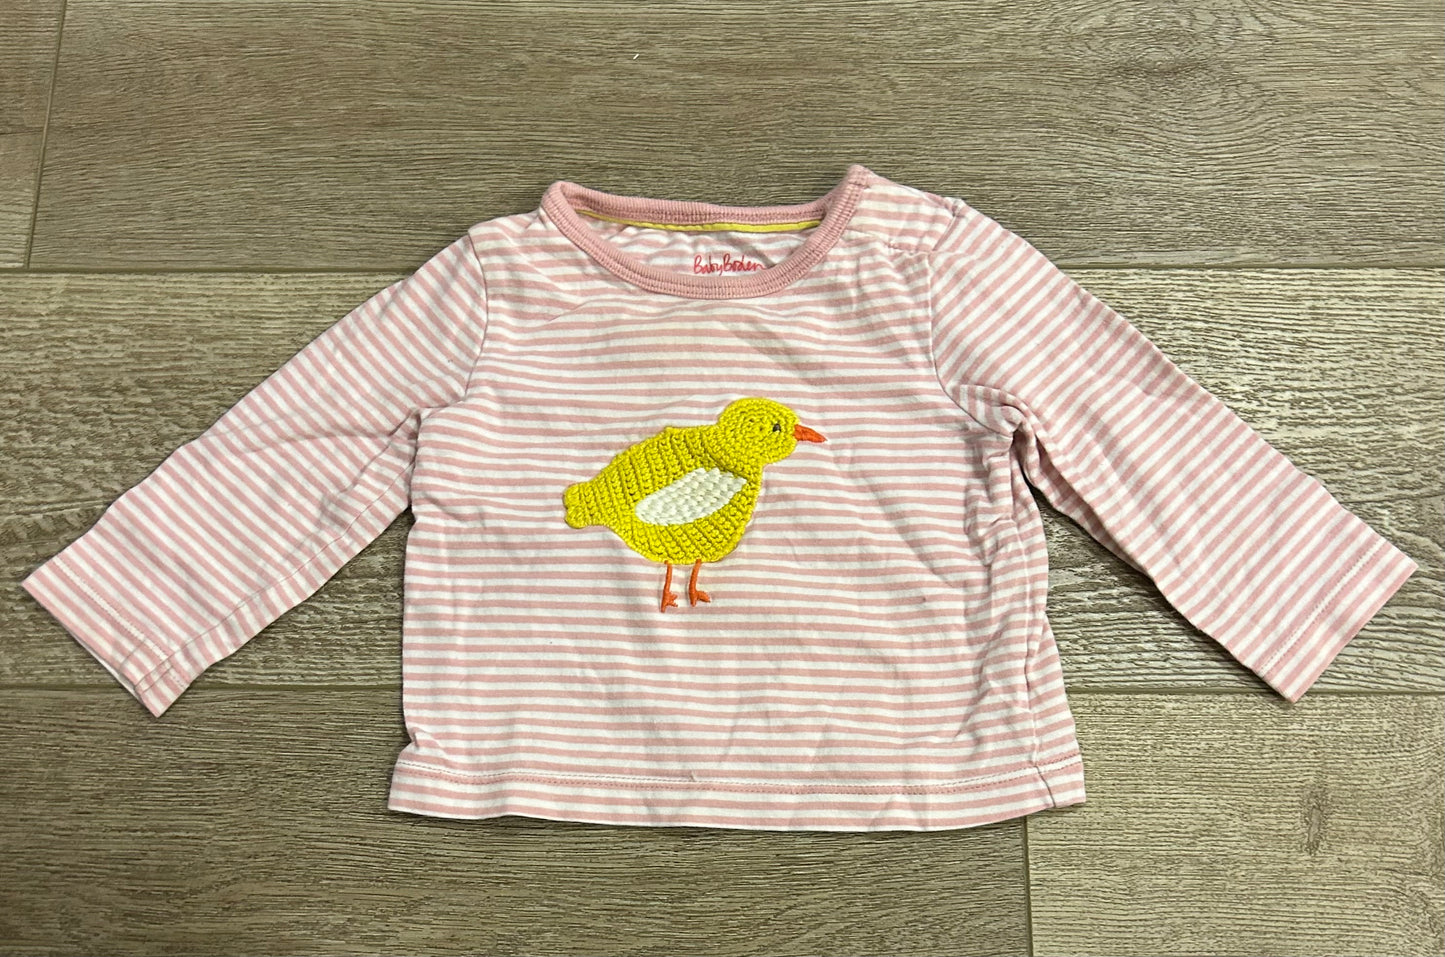 Boden 3-6m Shirt with Crochet Chick